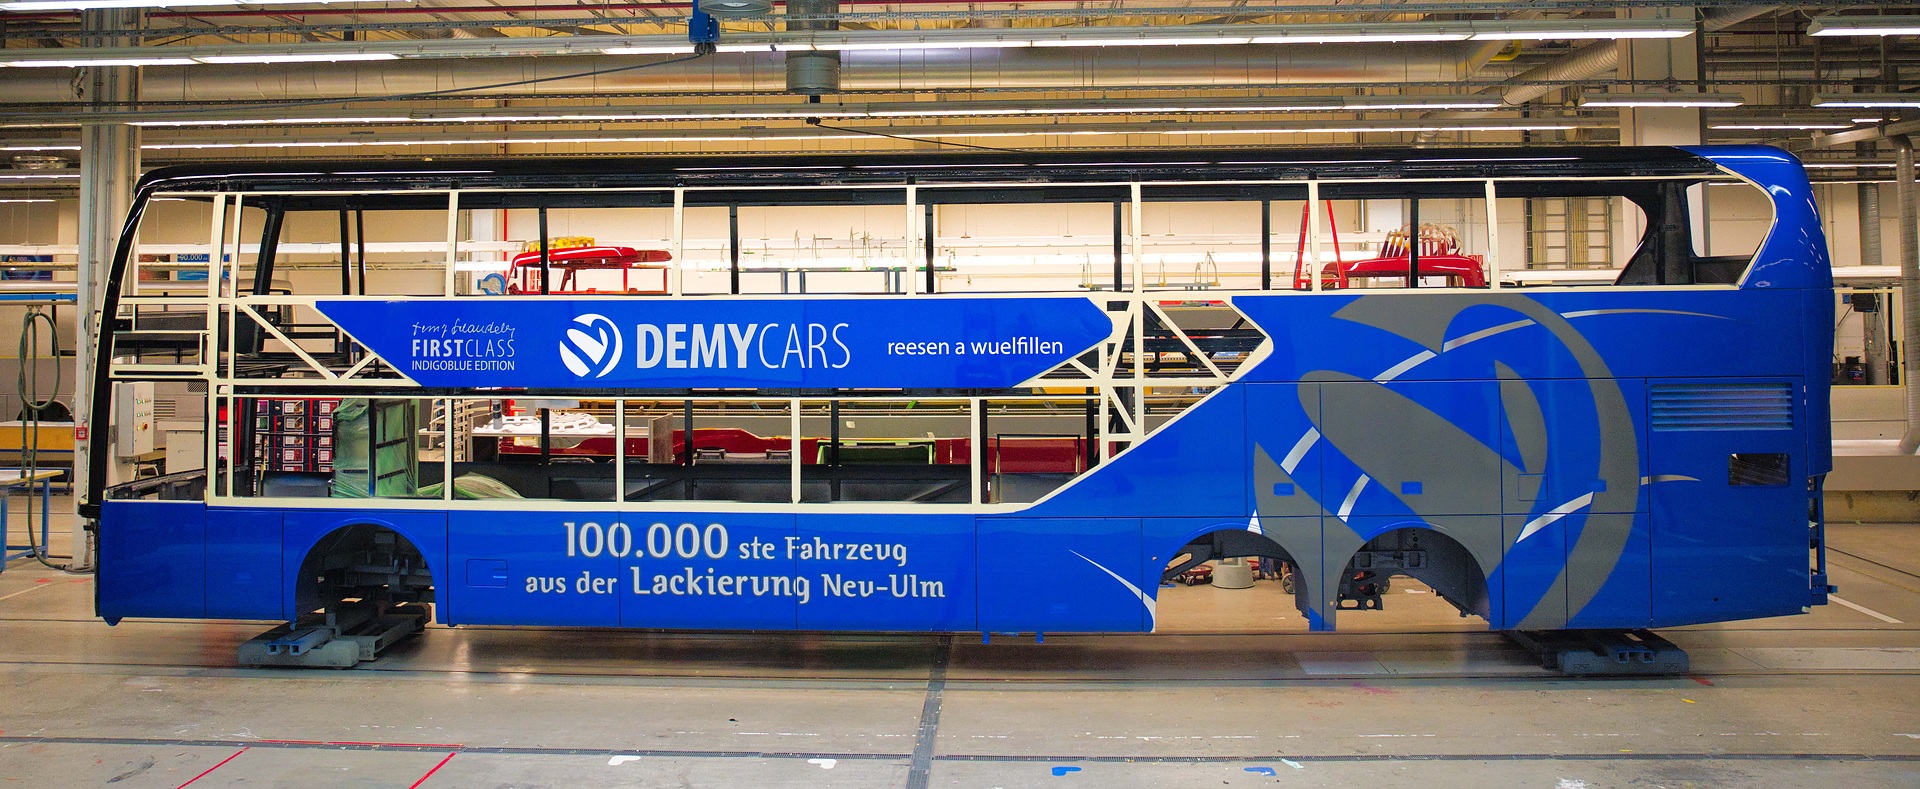 Farbenfrohes Jubiläum: Daimler Buses Werk Neu-Ulm lackiert 100.000sten Bus